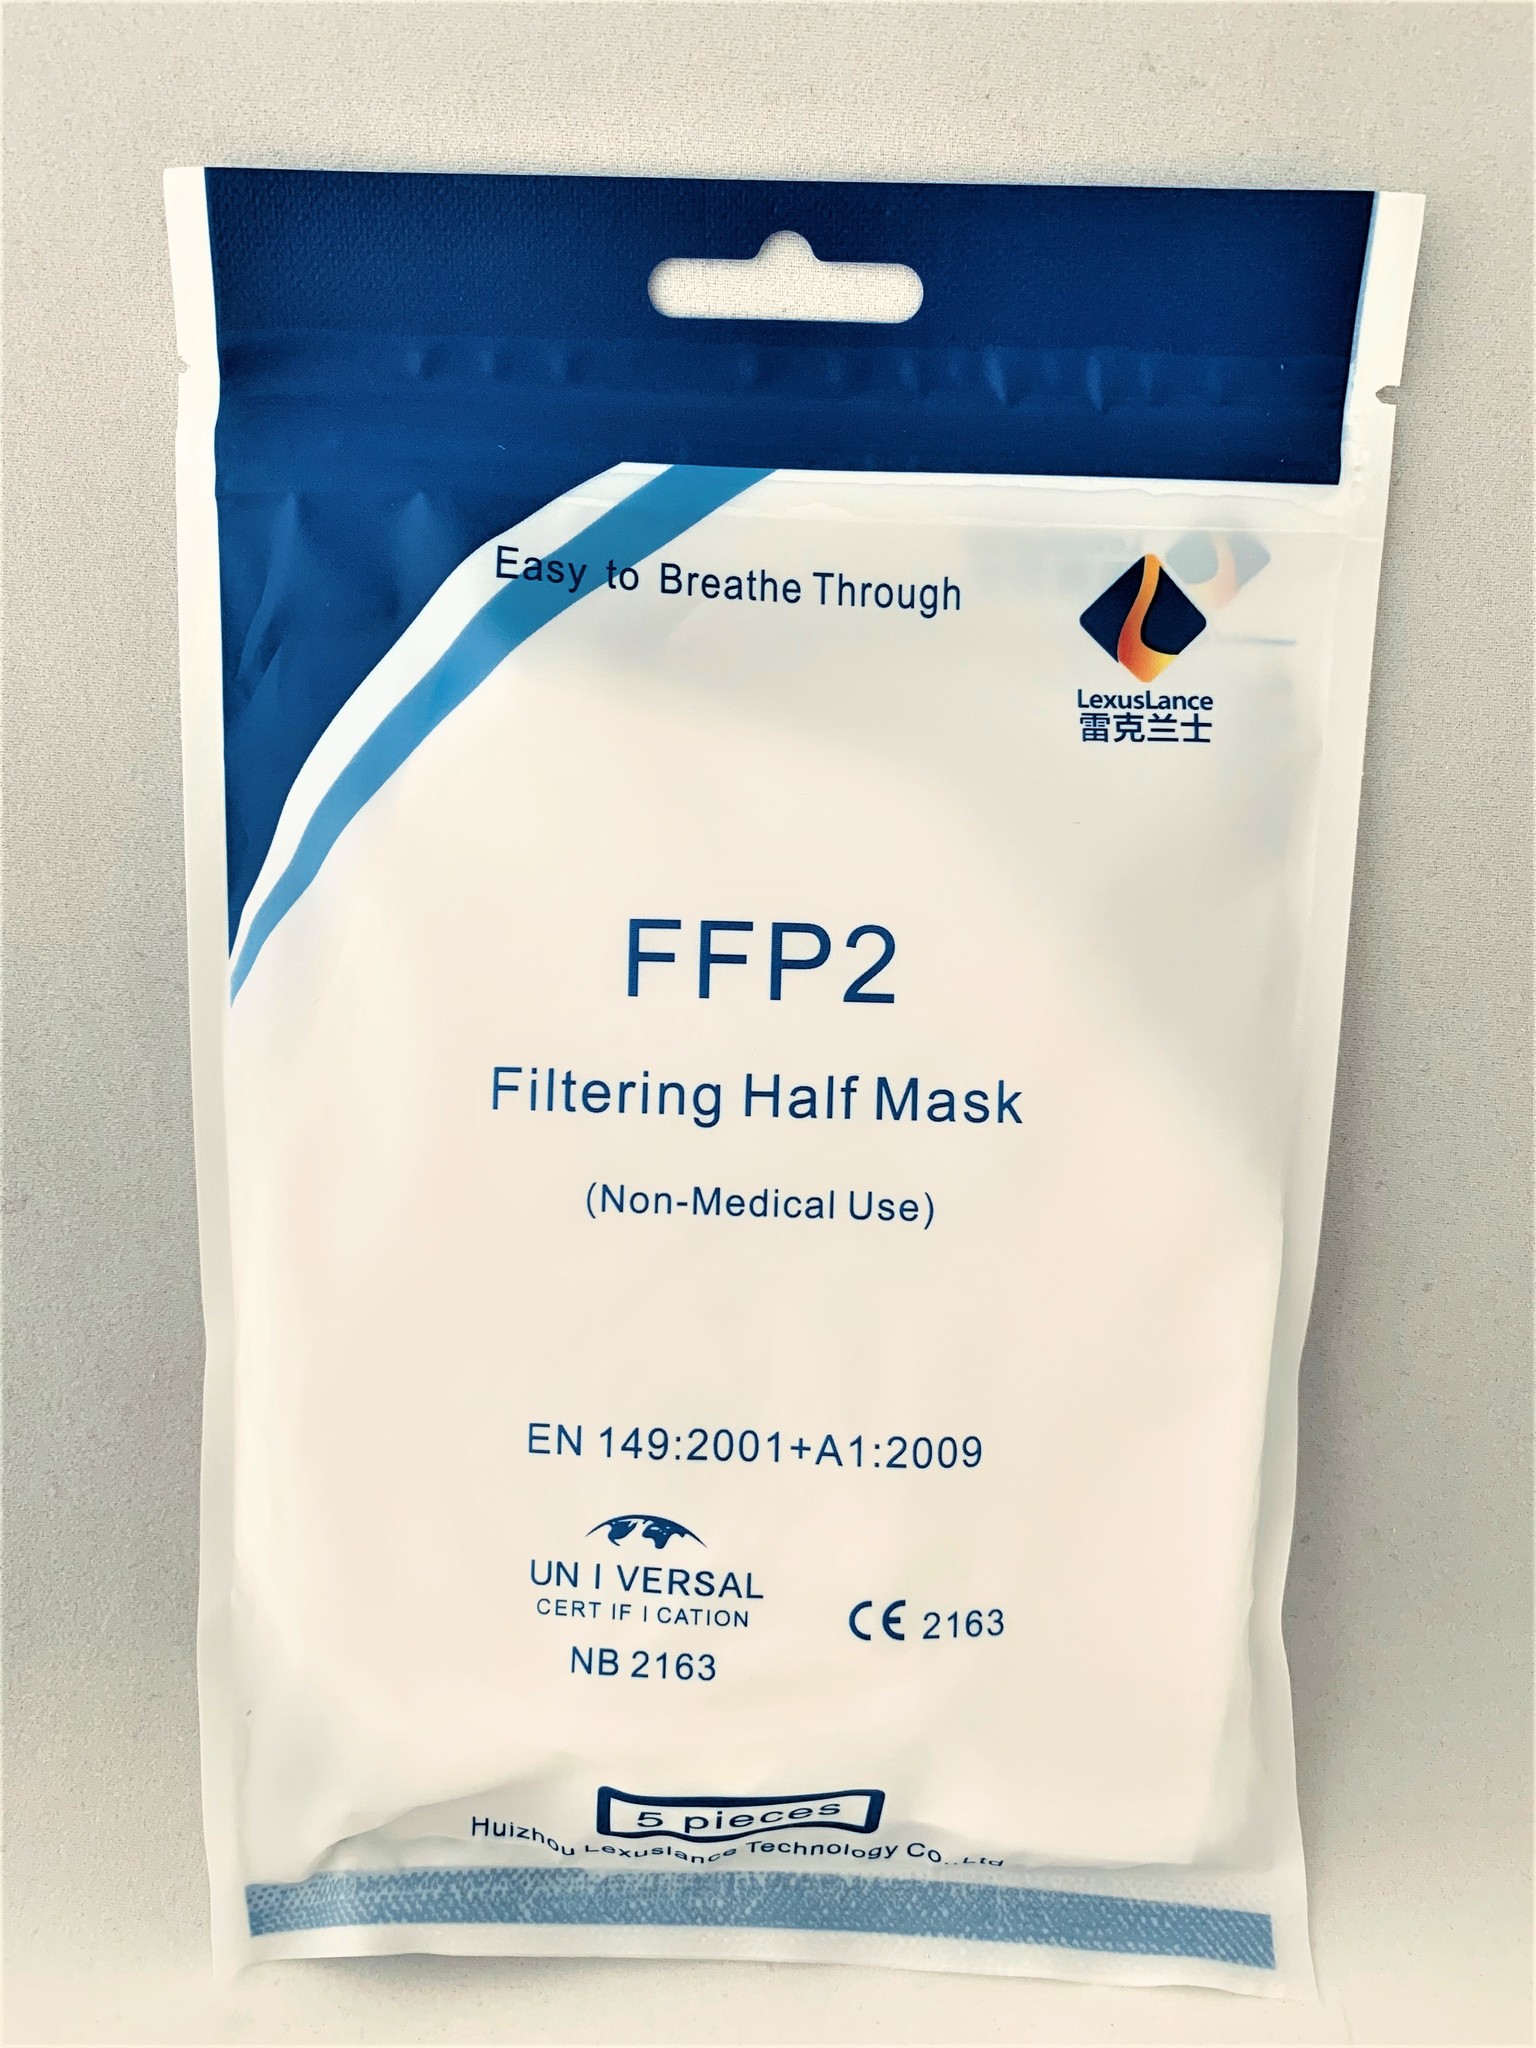 FFp2 / KN95 / masker (50 stuks)